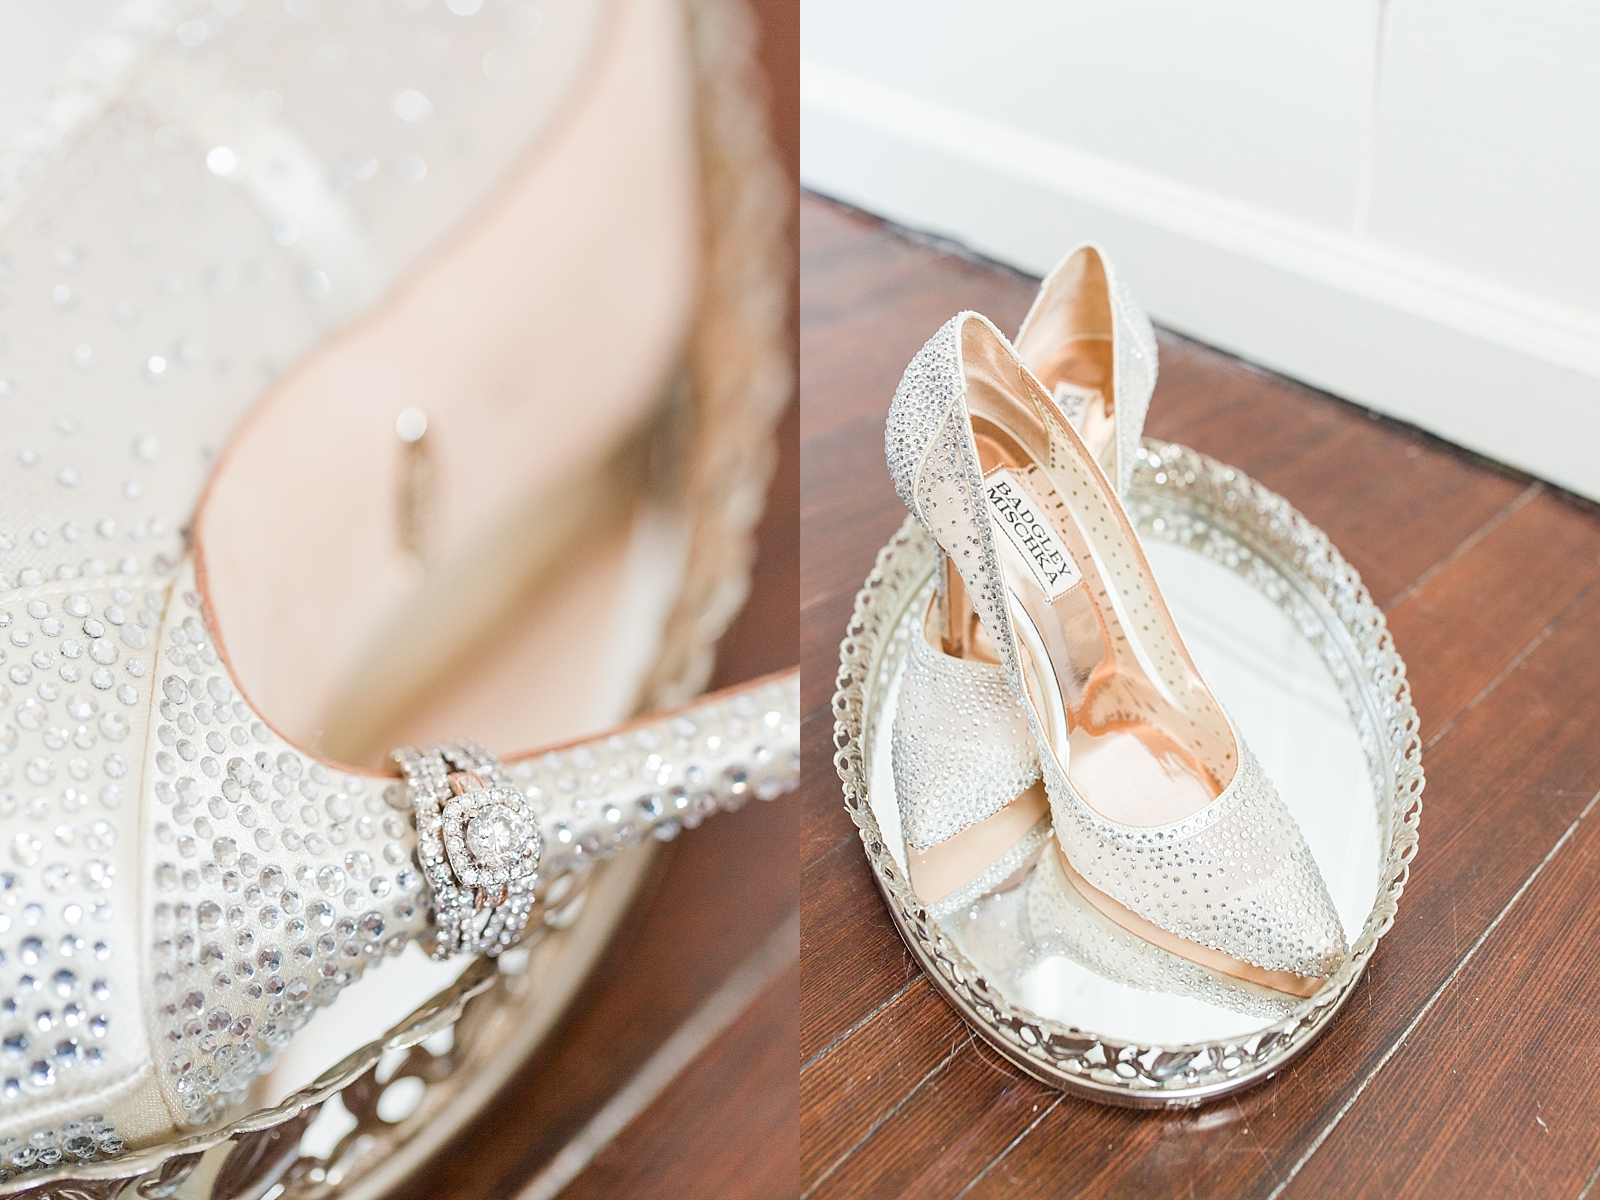 Atlanta Georgia Wedding Badgley Mischka bridal shoes on mirror tray and ring detail Photos